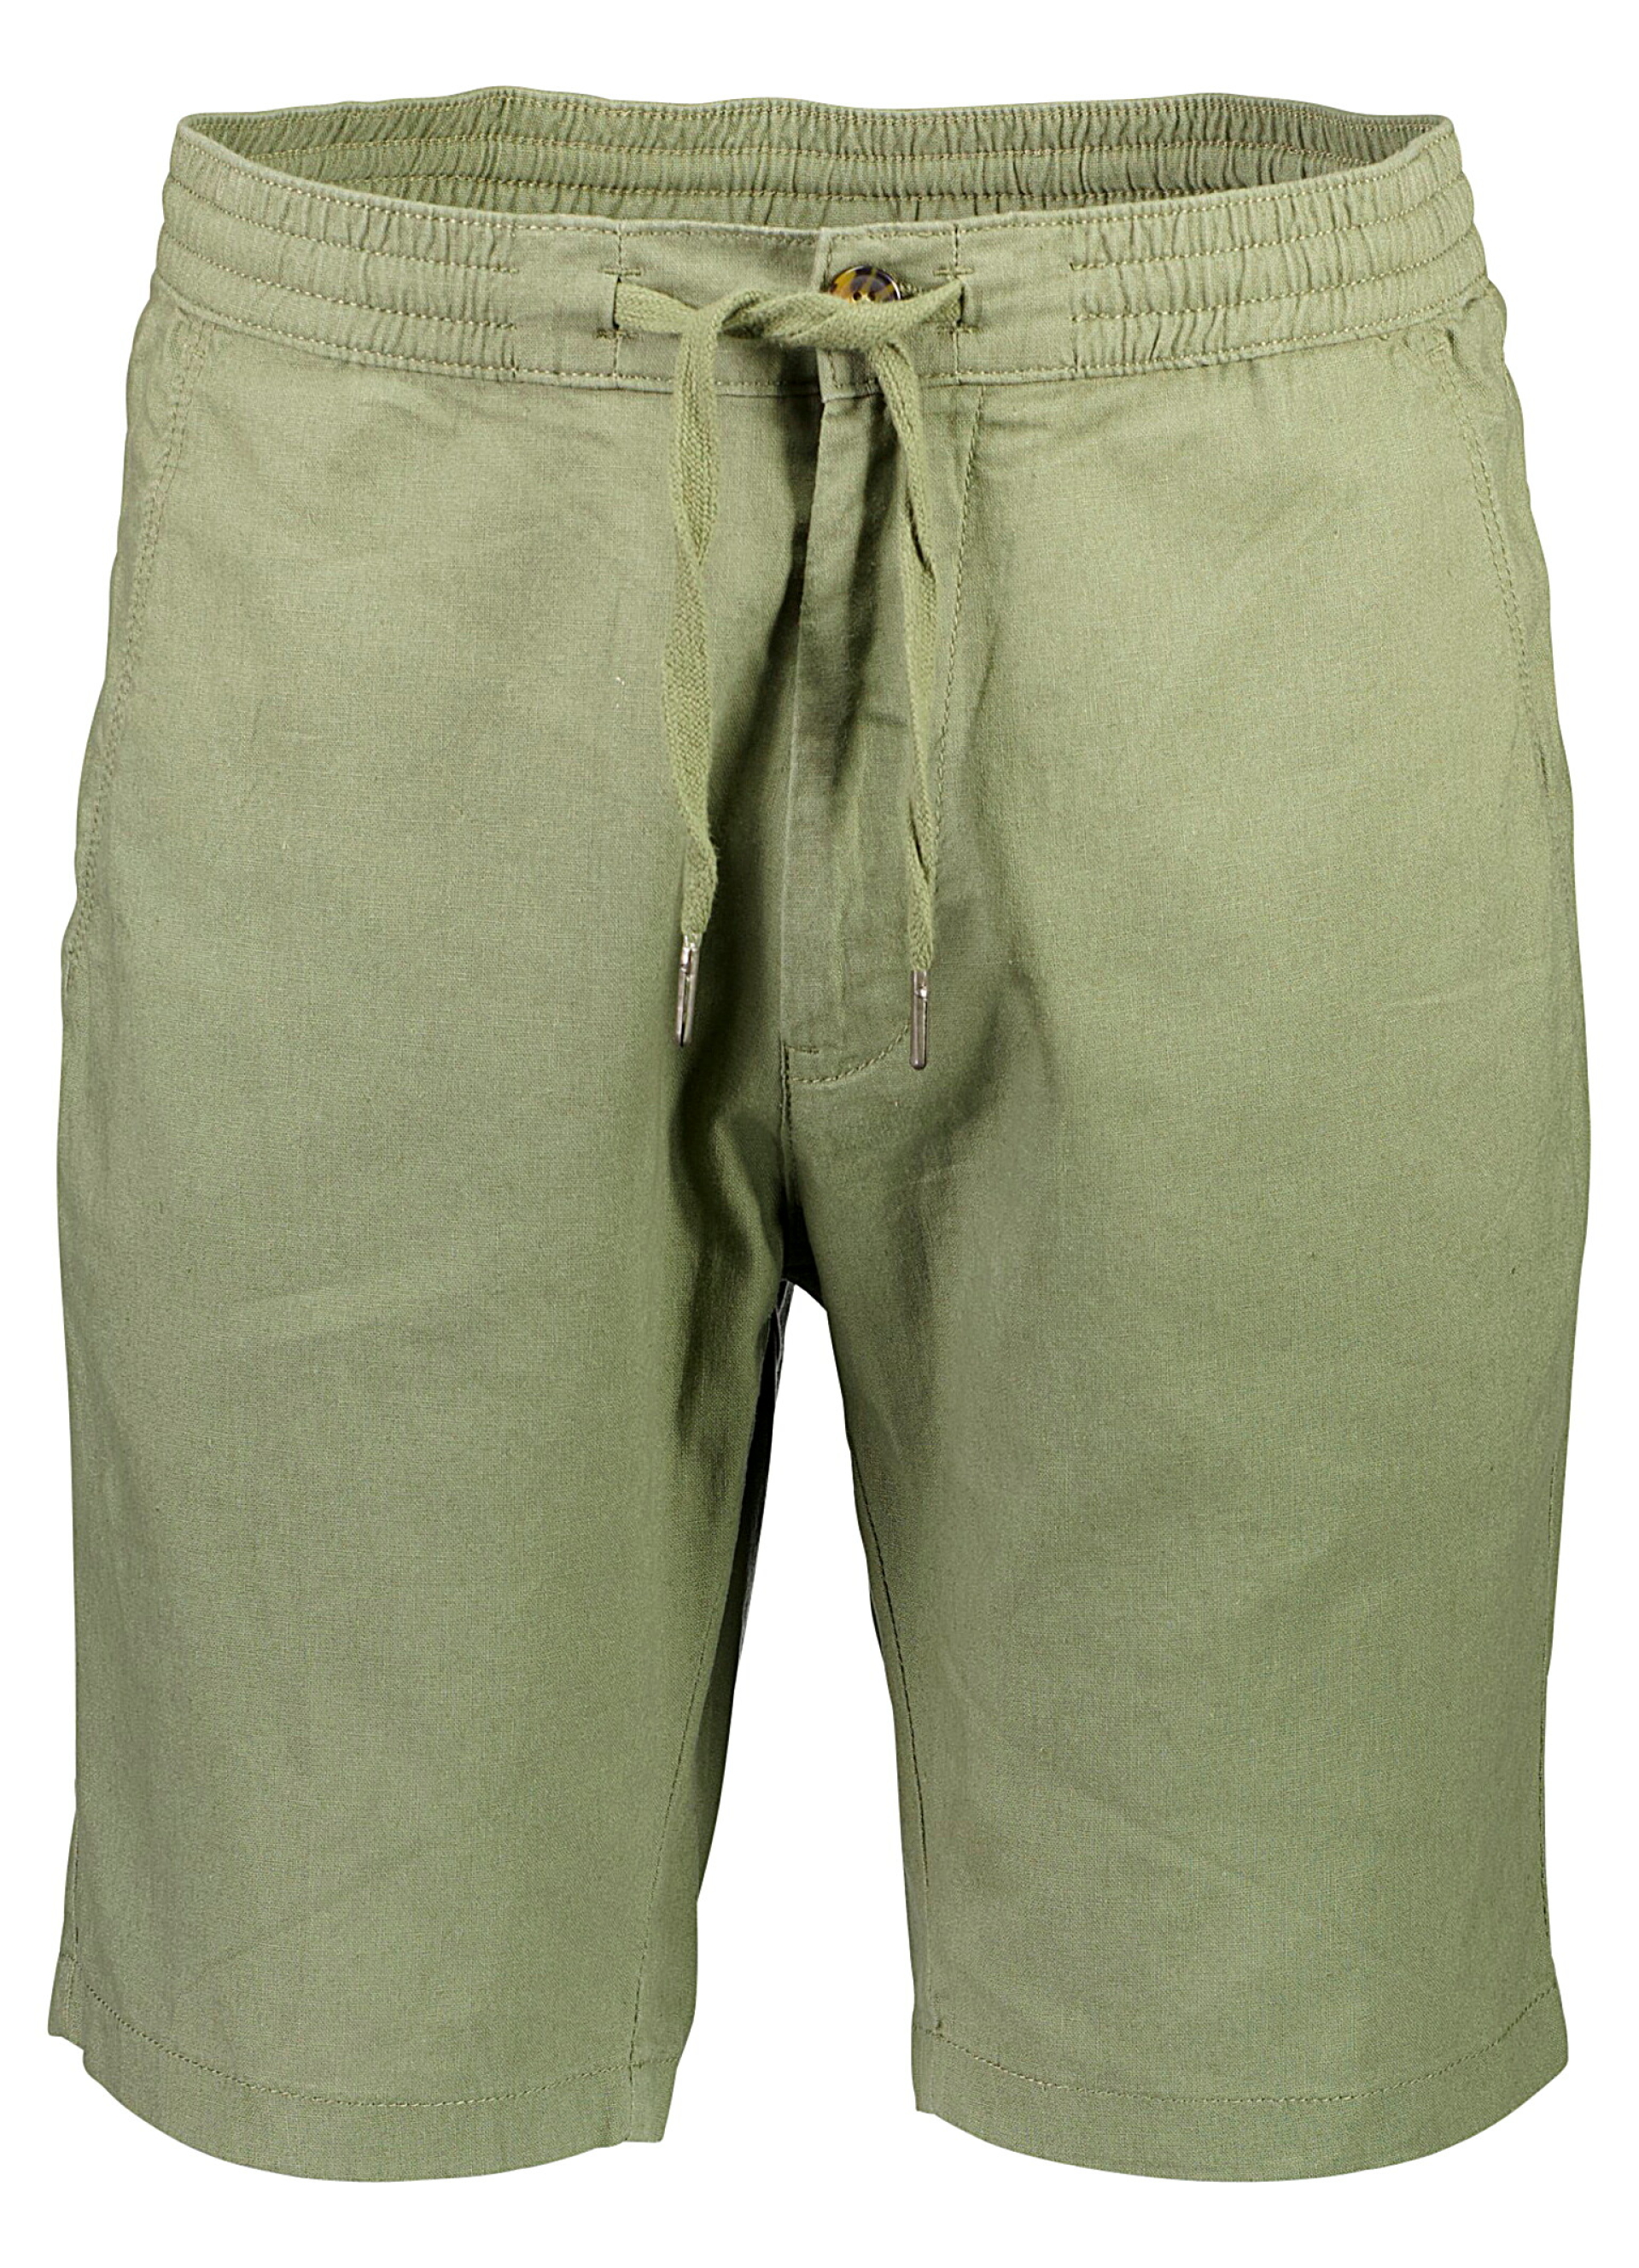 Lindbergh Linen shorts green / lt army